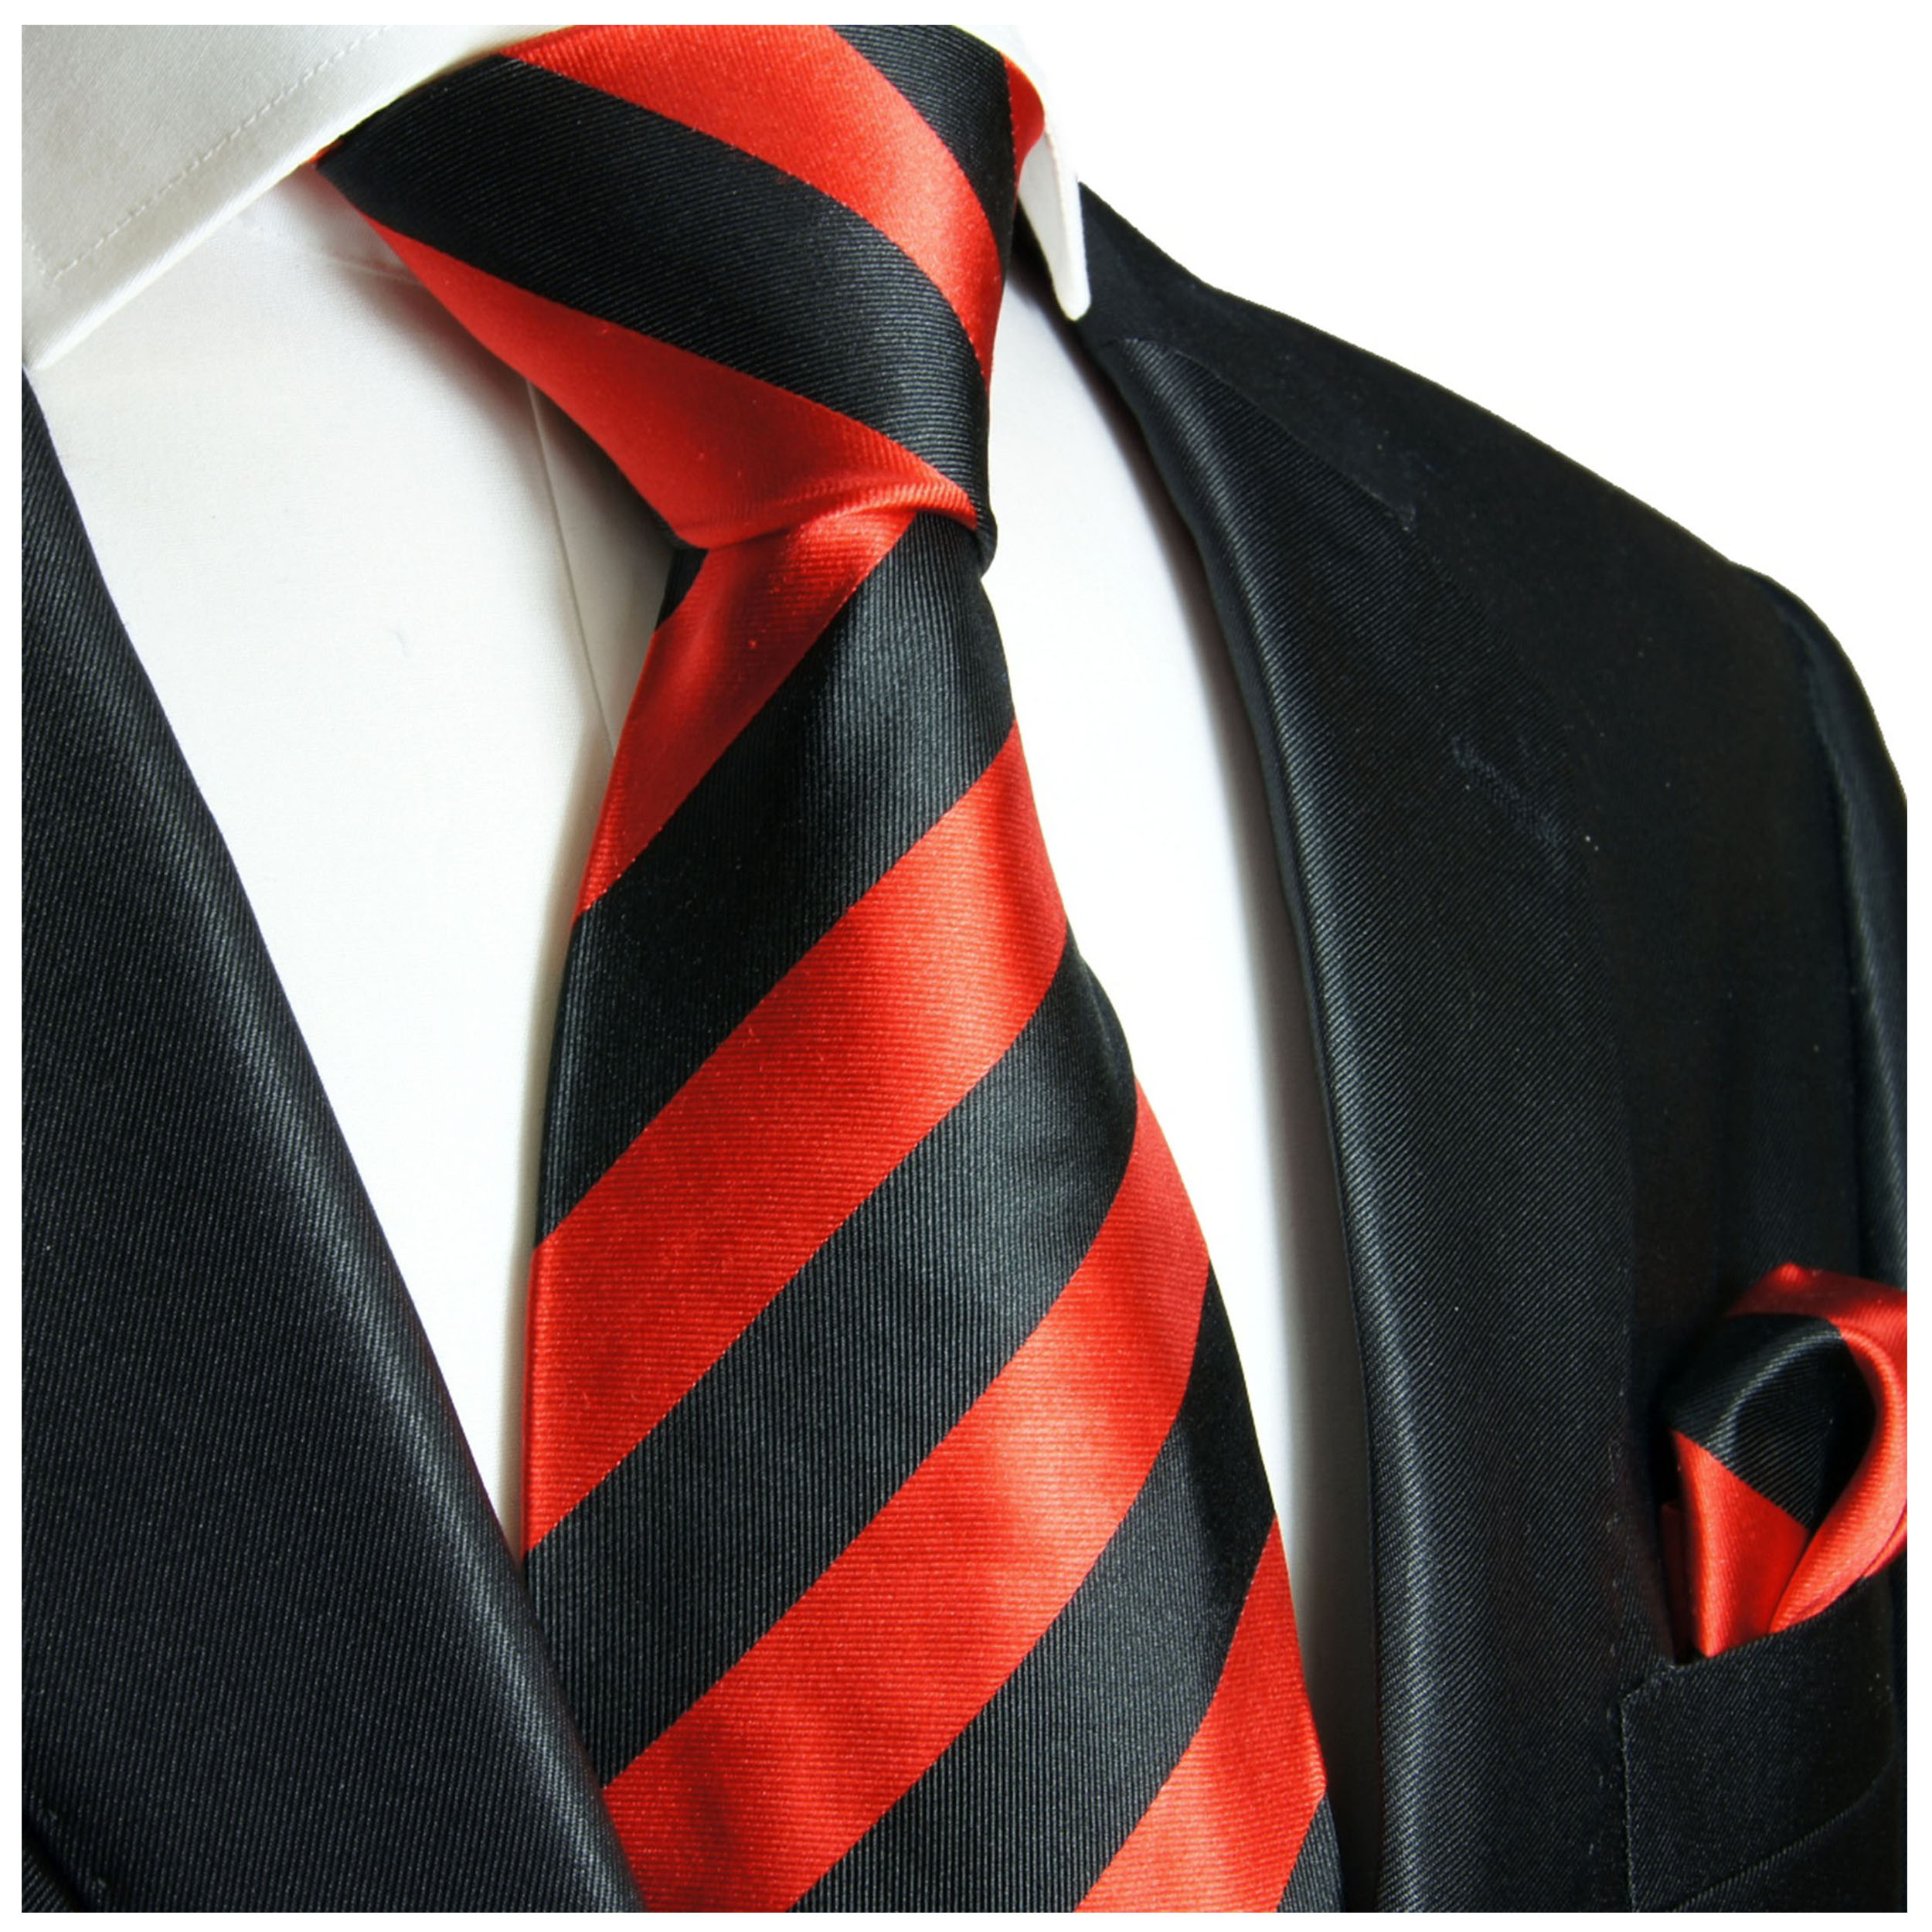 Red black necktie XL TIE 100% SILK by Paul Malone 719 - Paul Malone Shop